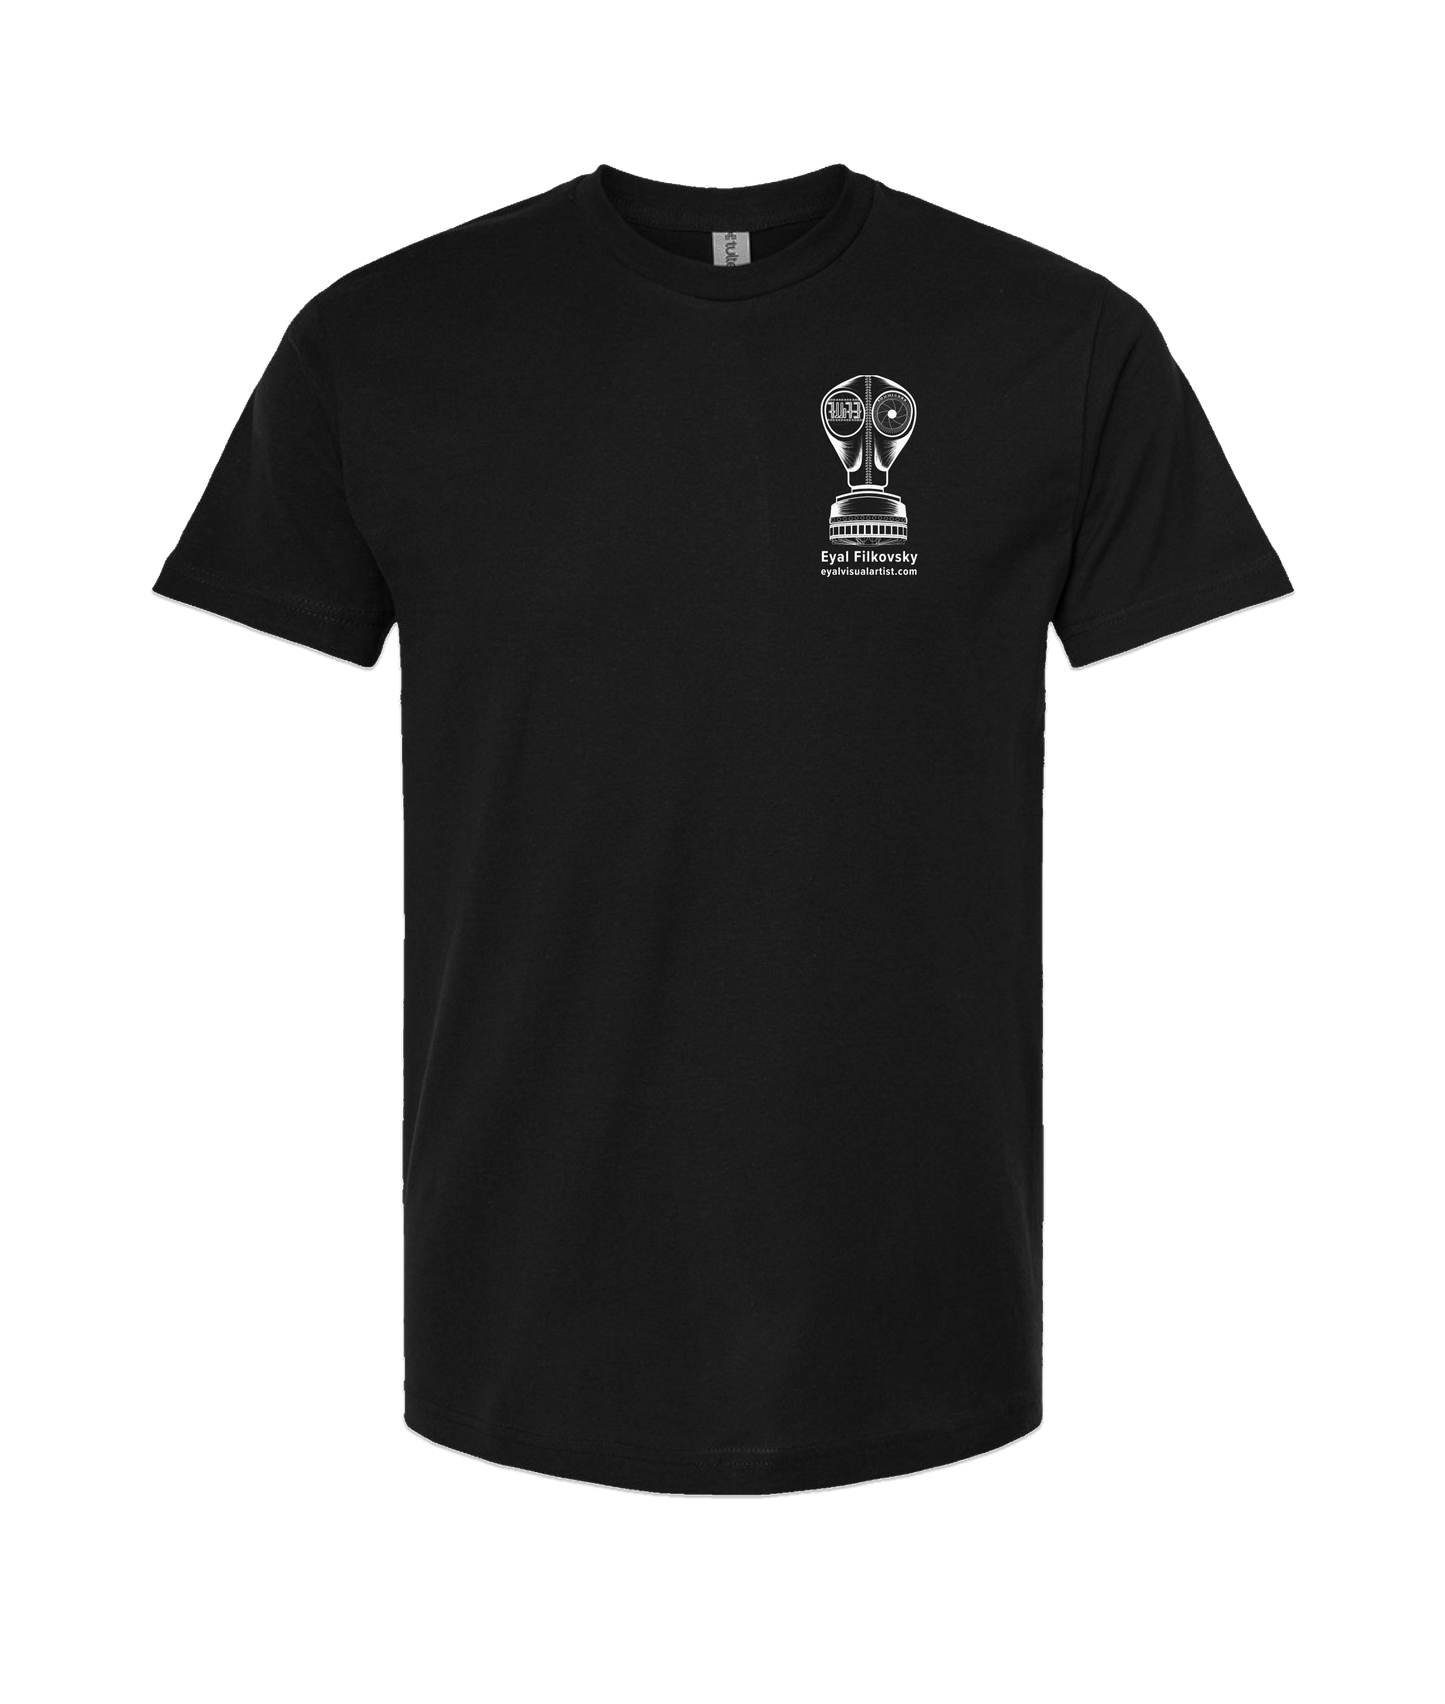 Eyal Filkovsky Visual Artist - Mask Logo - Black T-Shirt